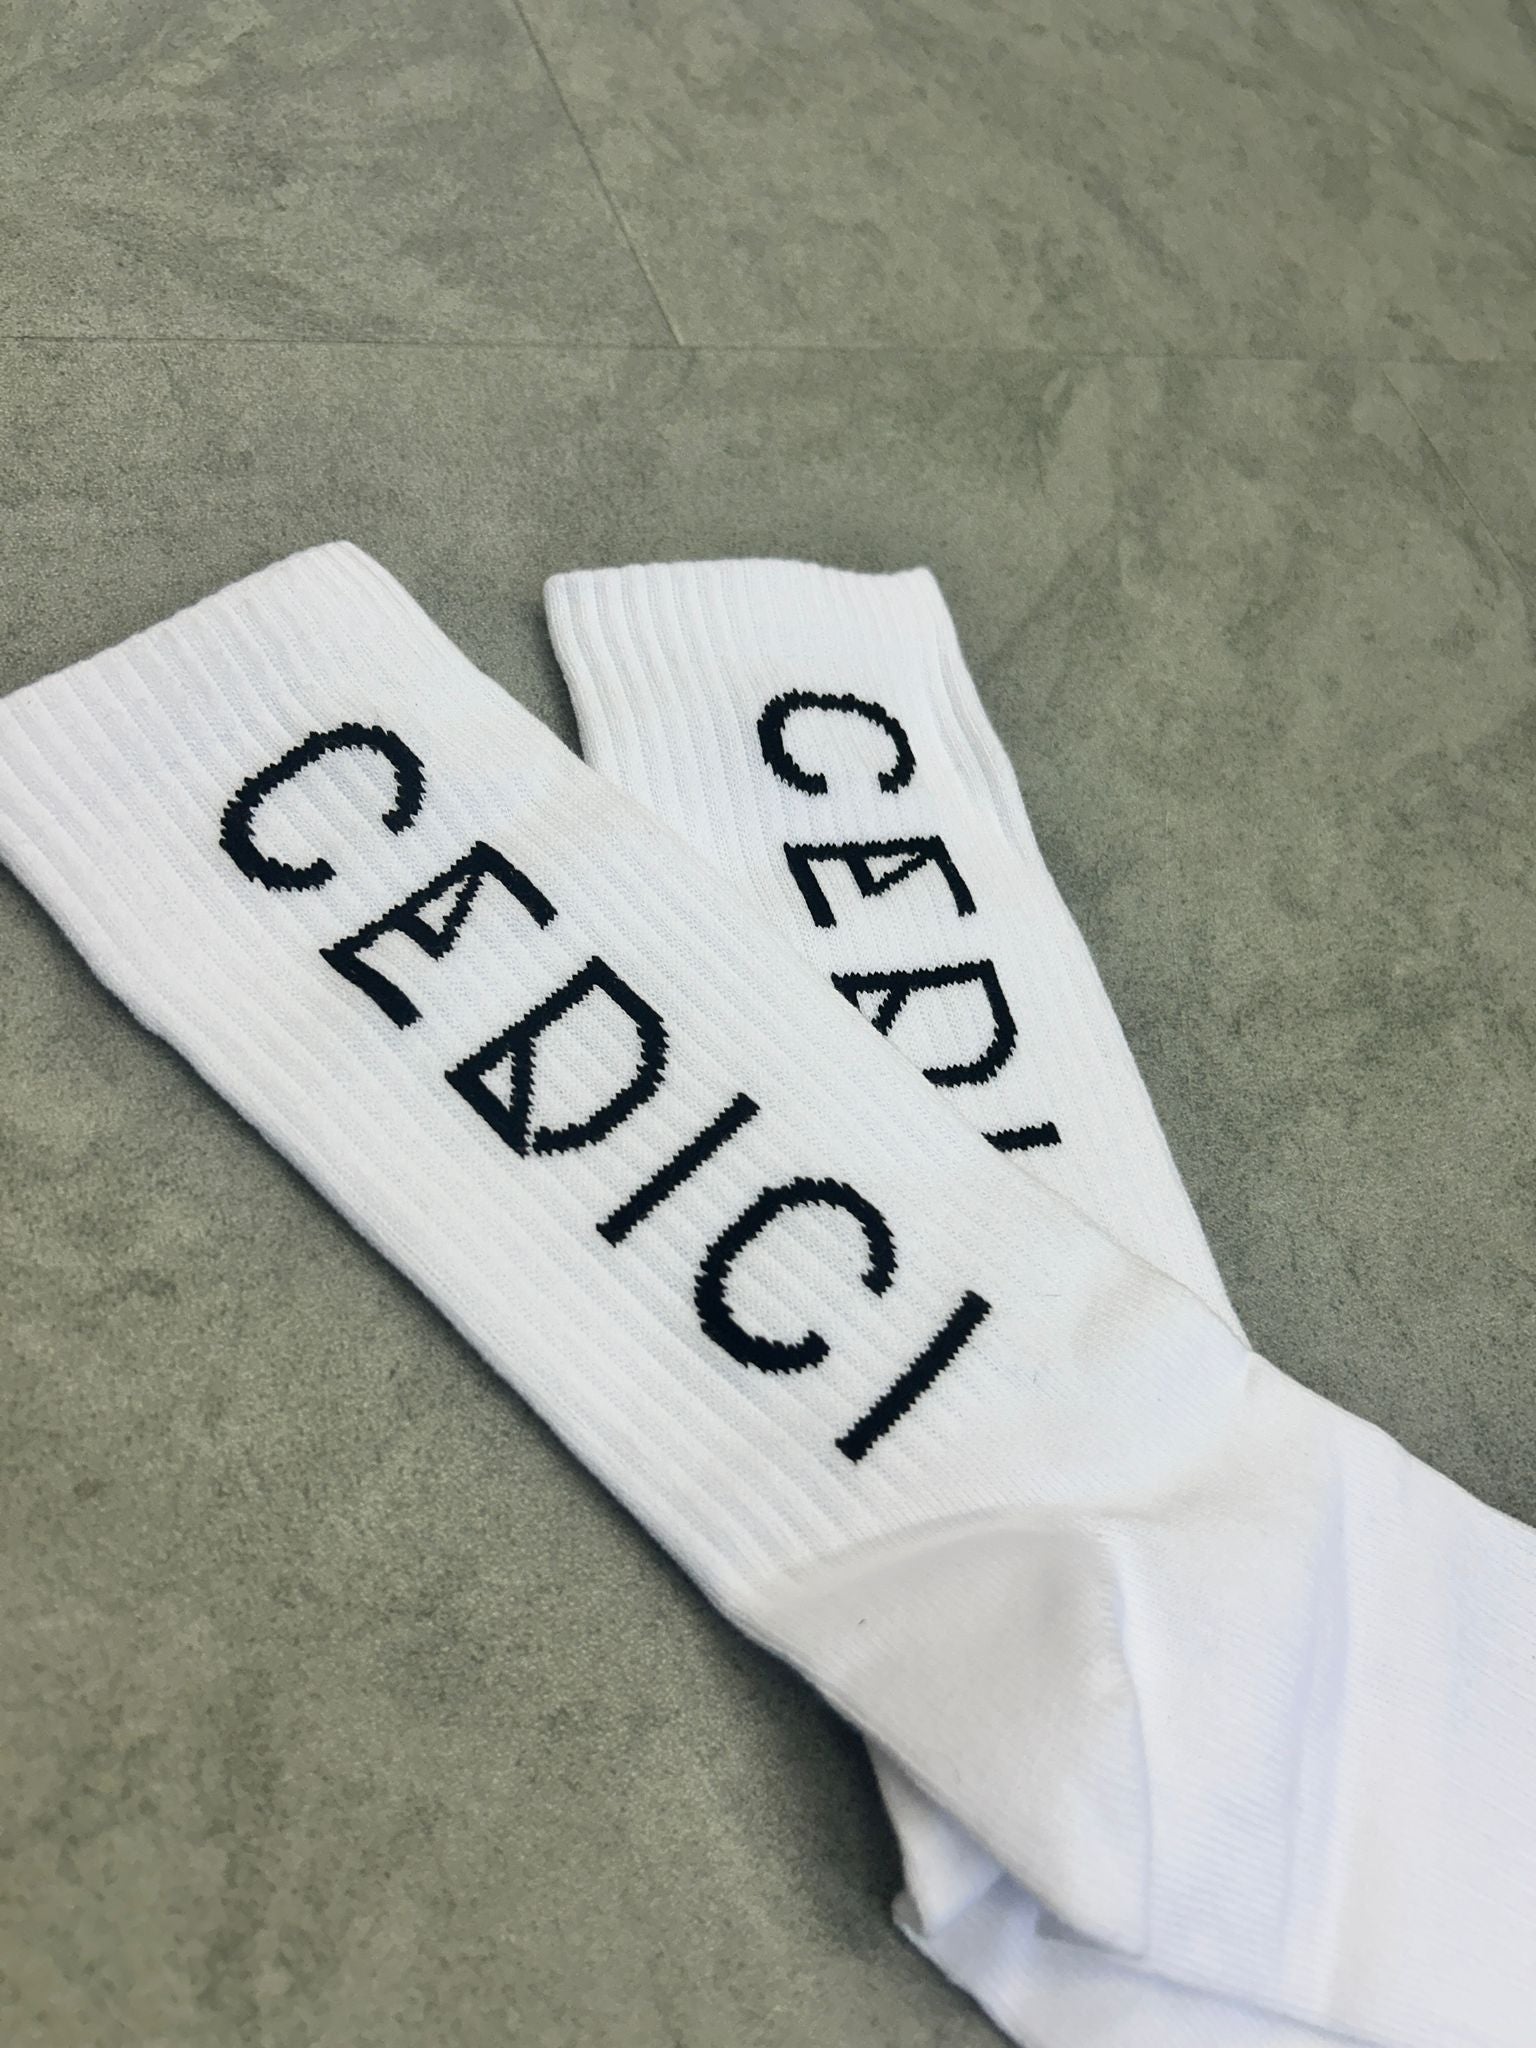 CEDICI Logo Socks